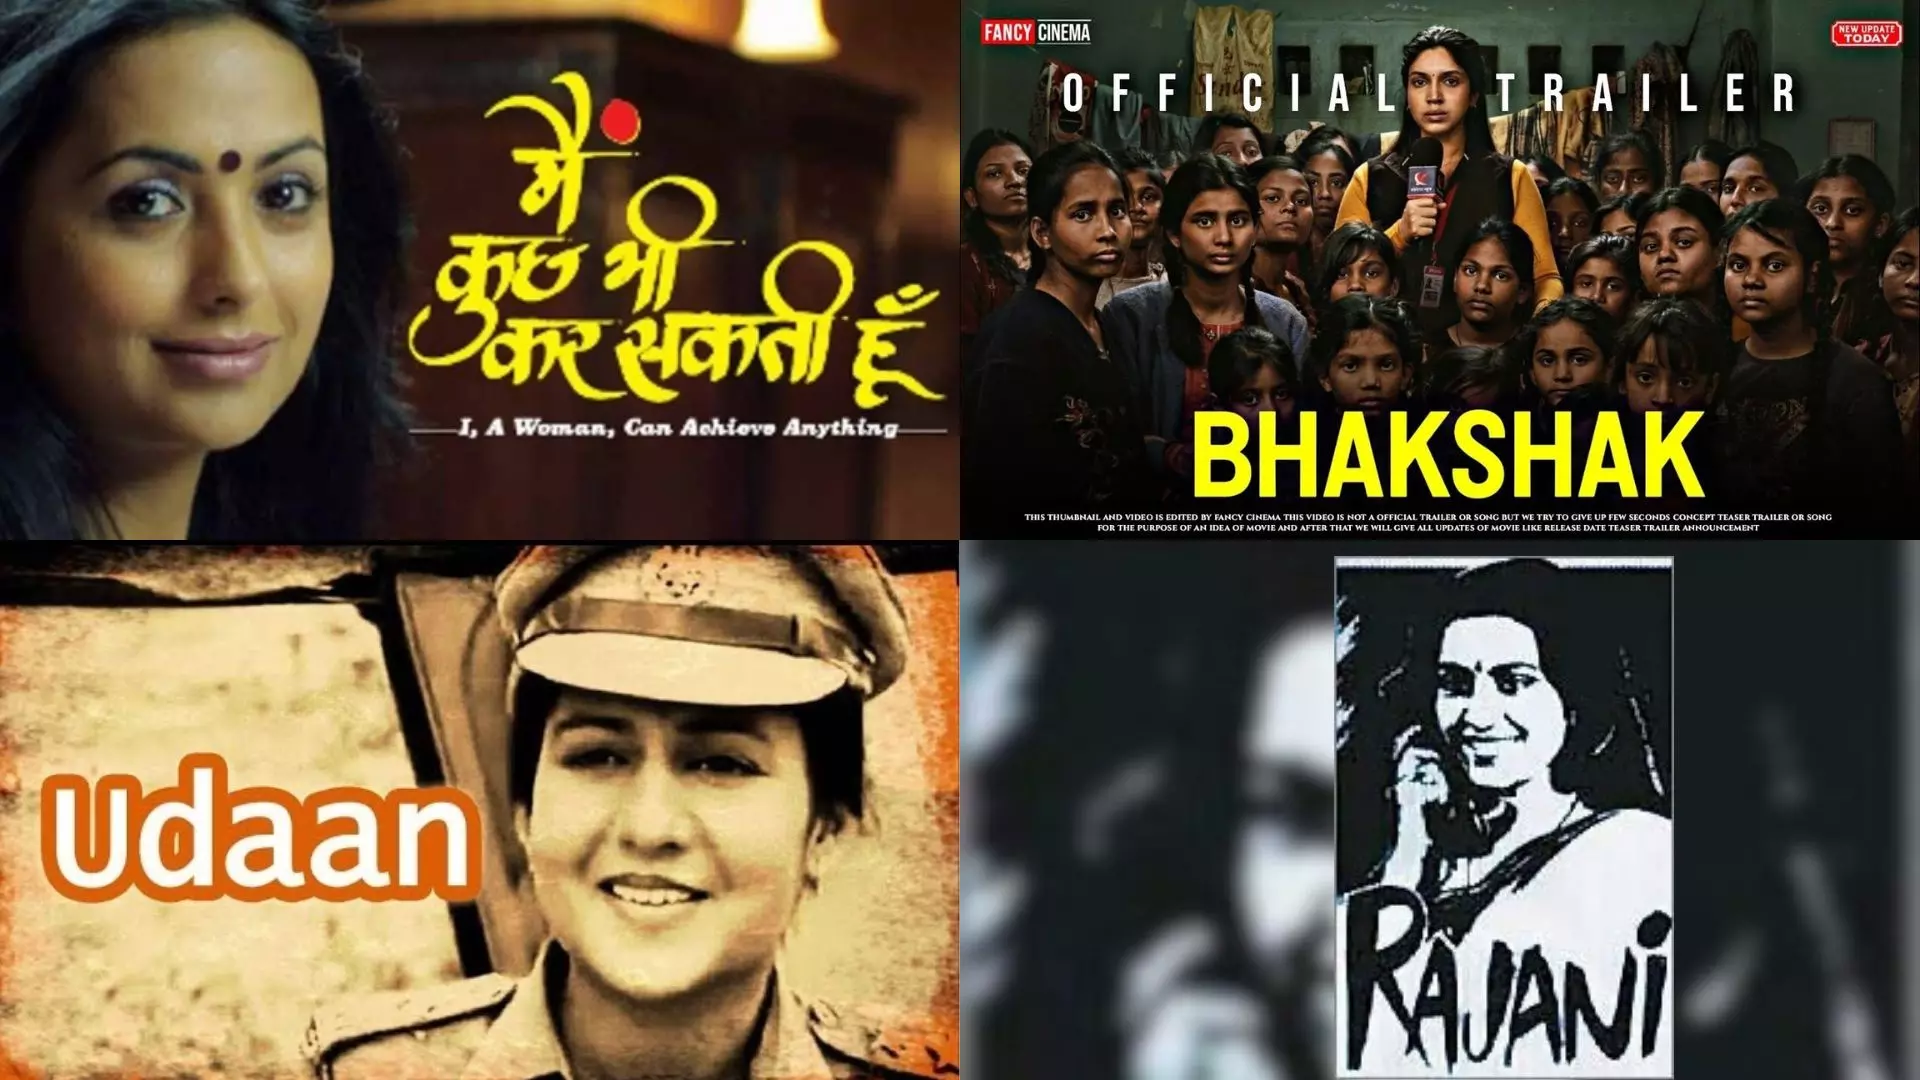 Rajani to Bhakshak: Small screen sheroes who were harbingers of social change